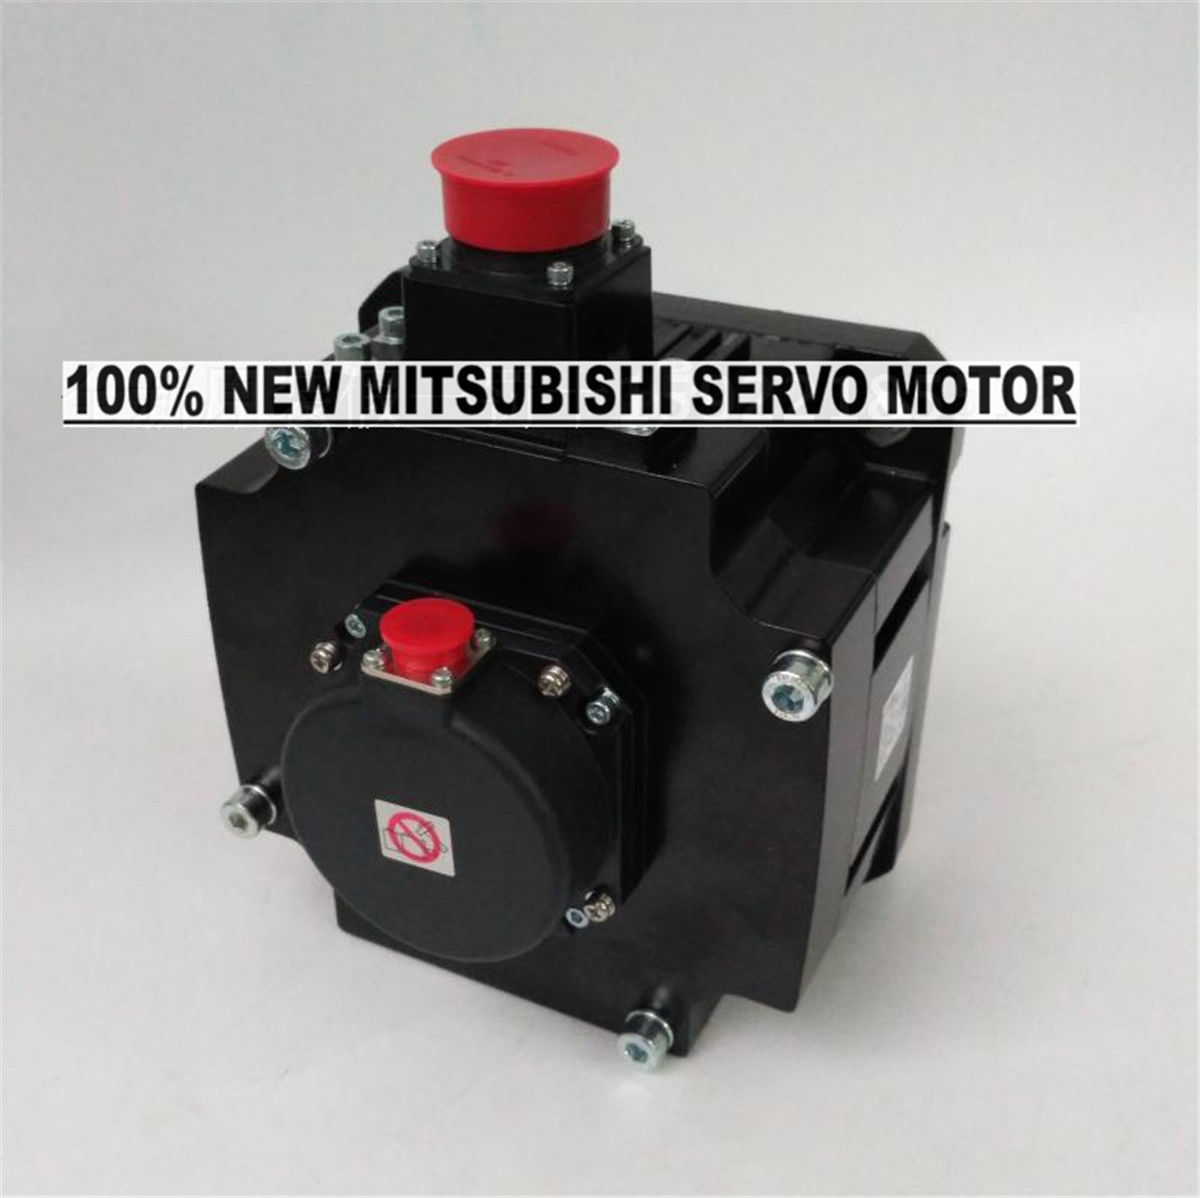 NEW Mitsubishi Servo Motor HG-SR202J in box HGSR202J - zum Schließen ins Bild klicken